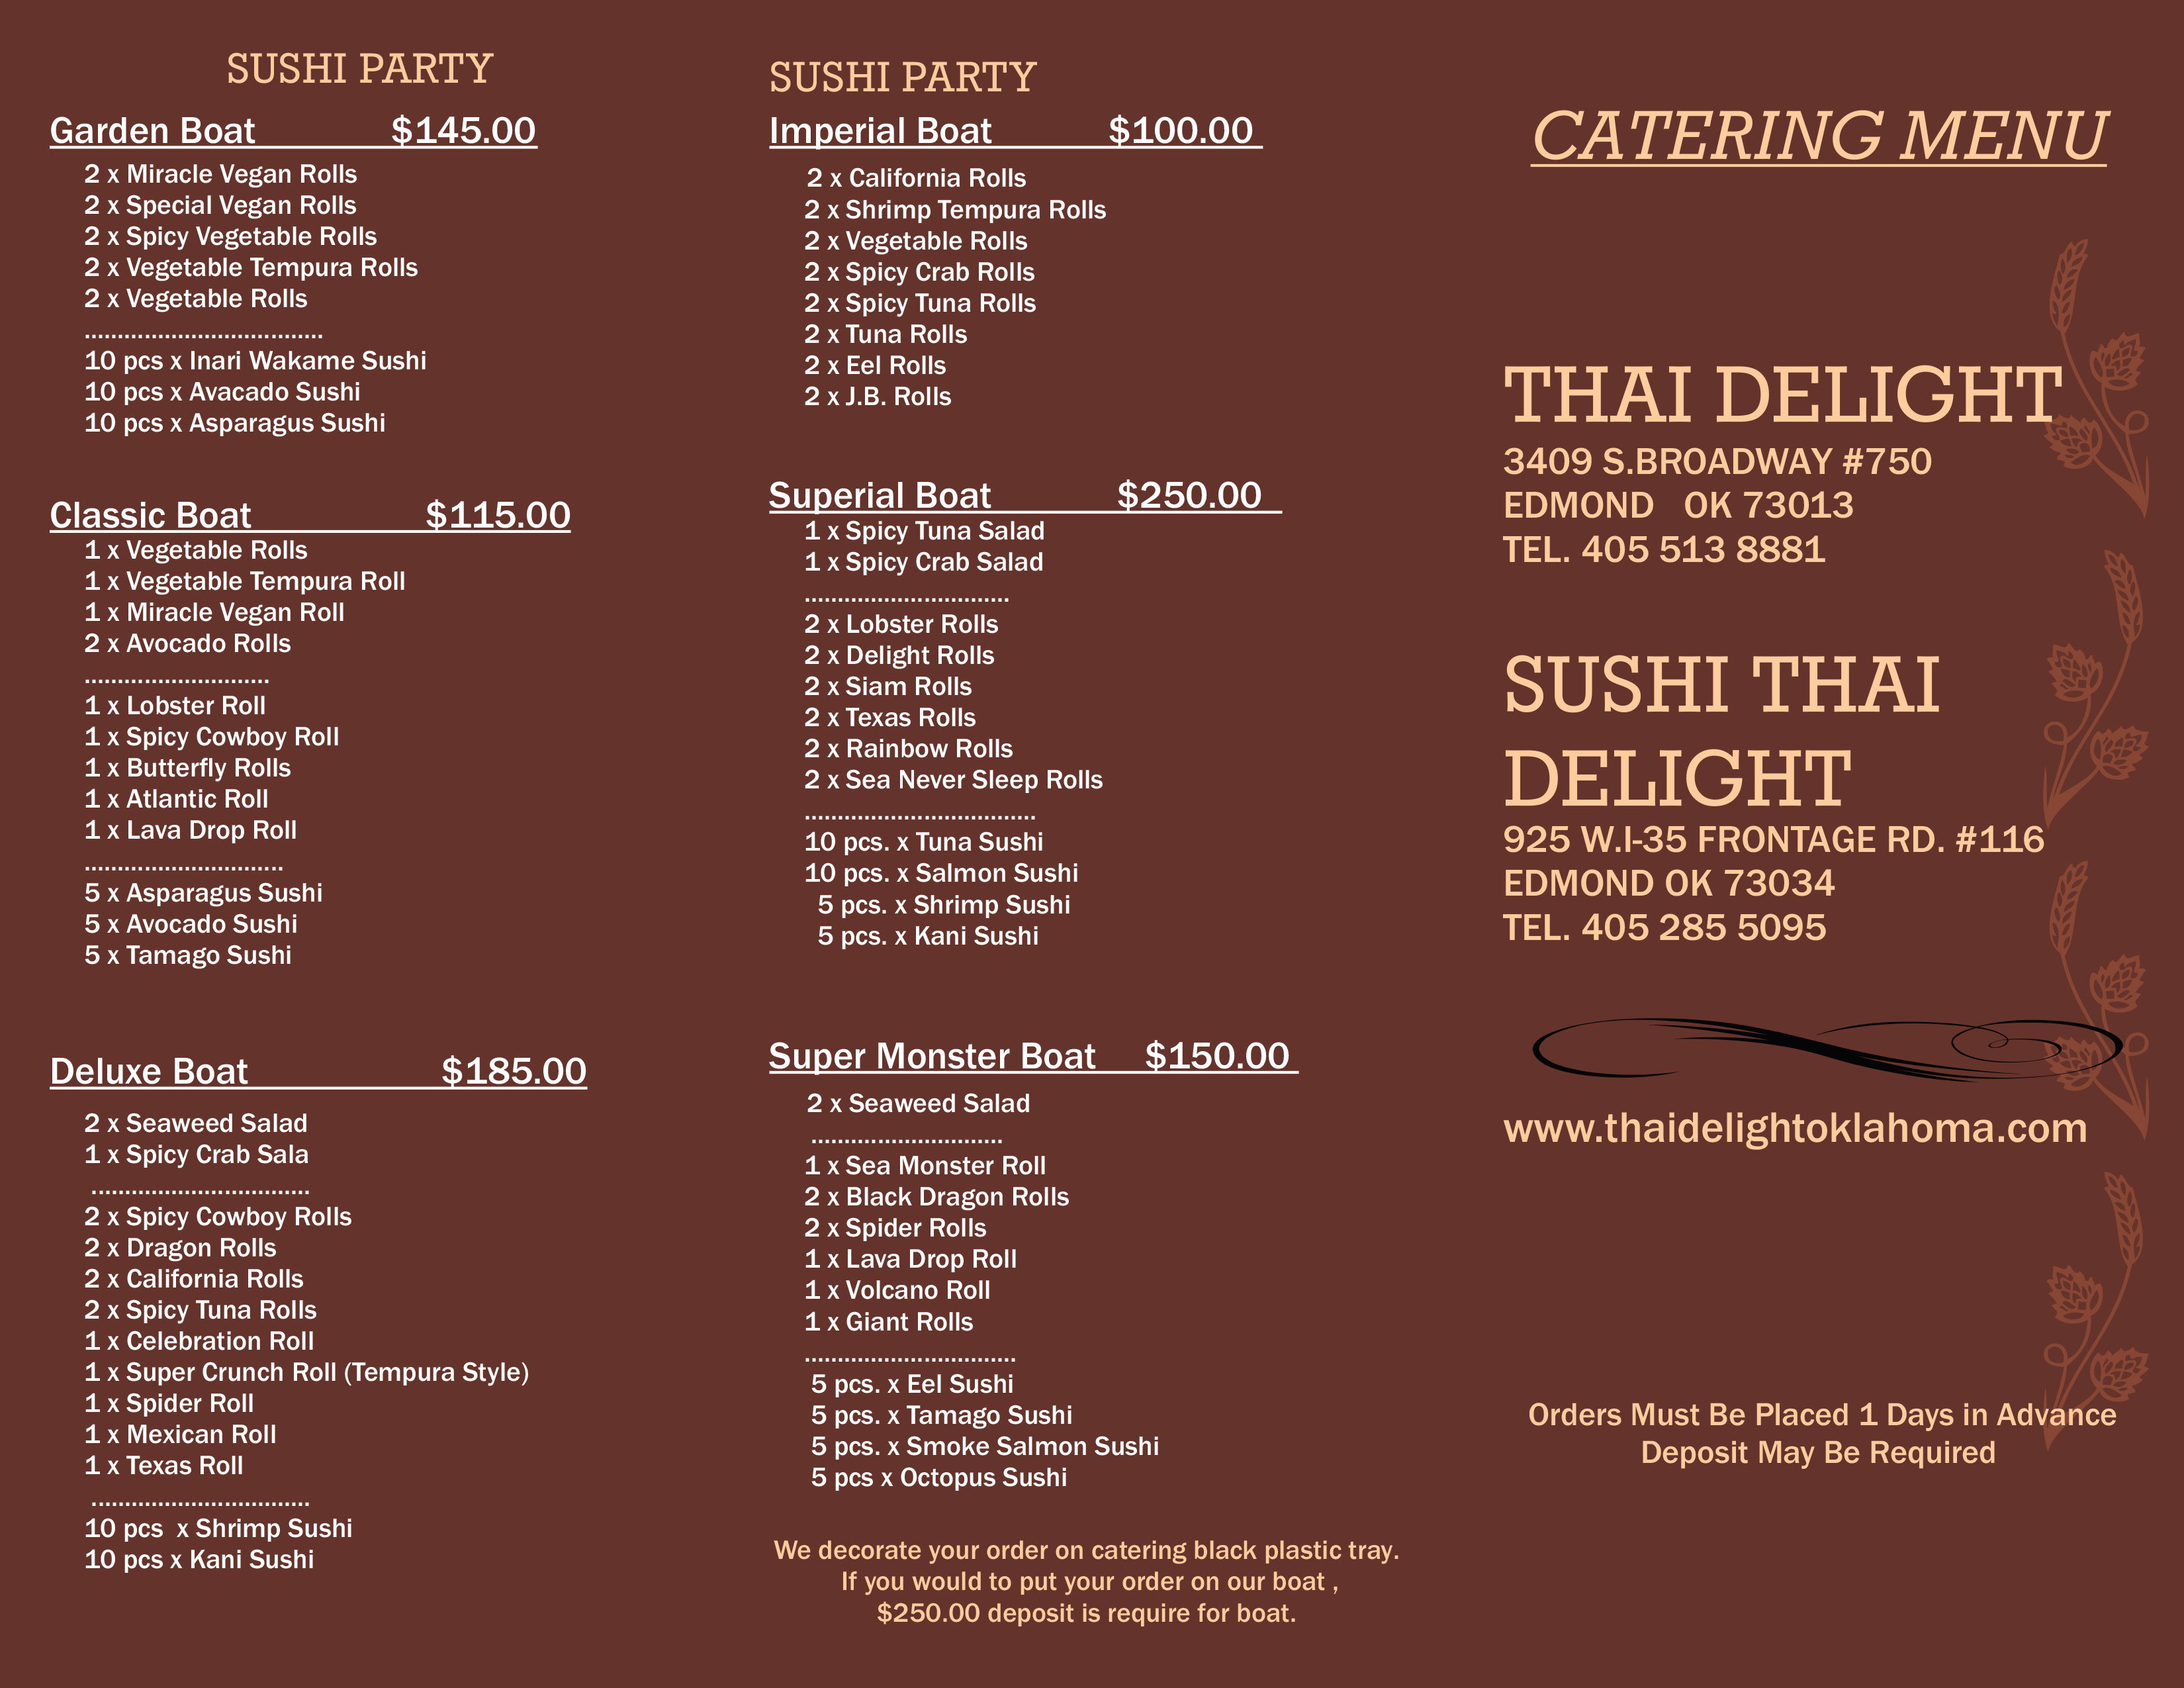 Catering Menu P1 - Thai Delight Broadway Location (Edmond)